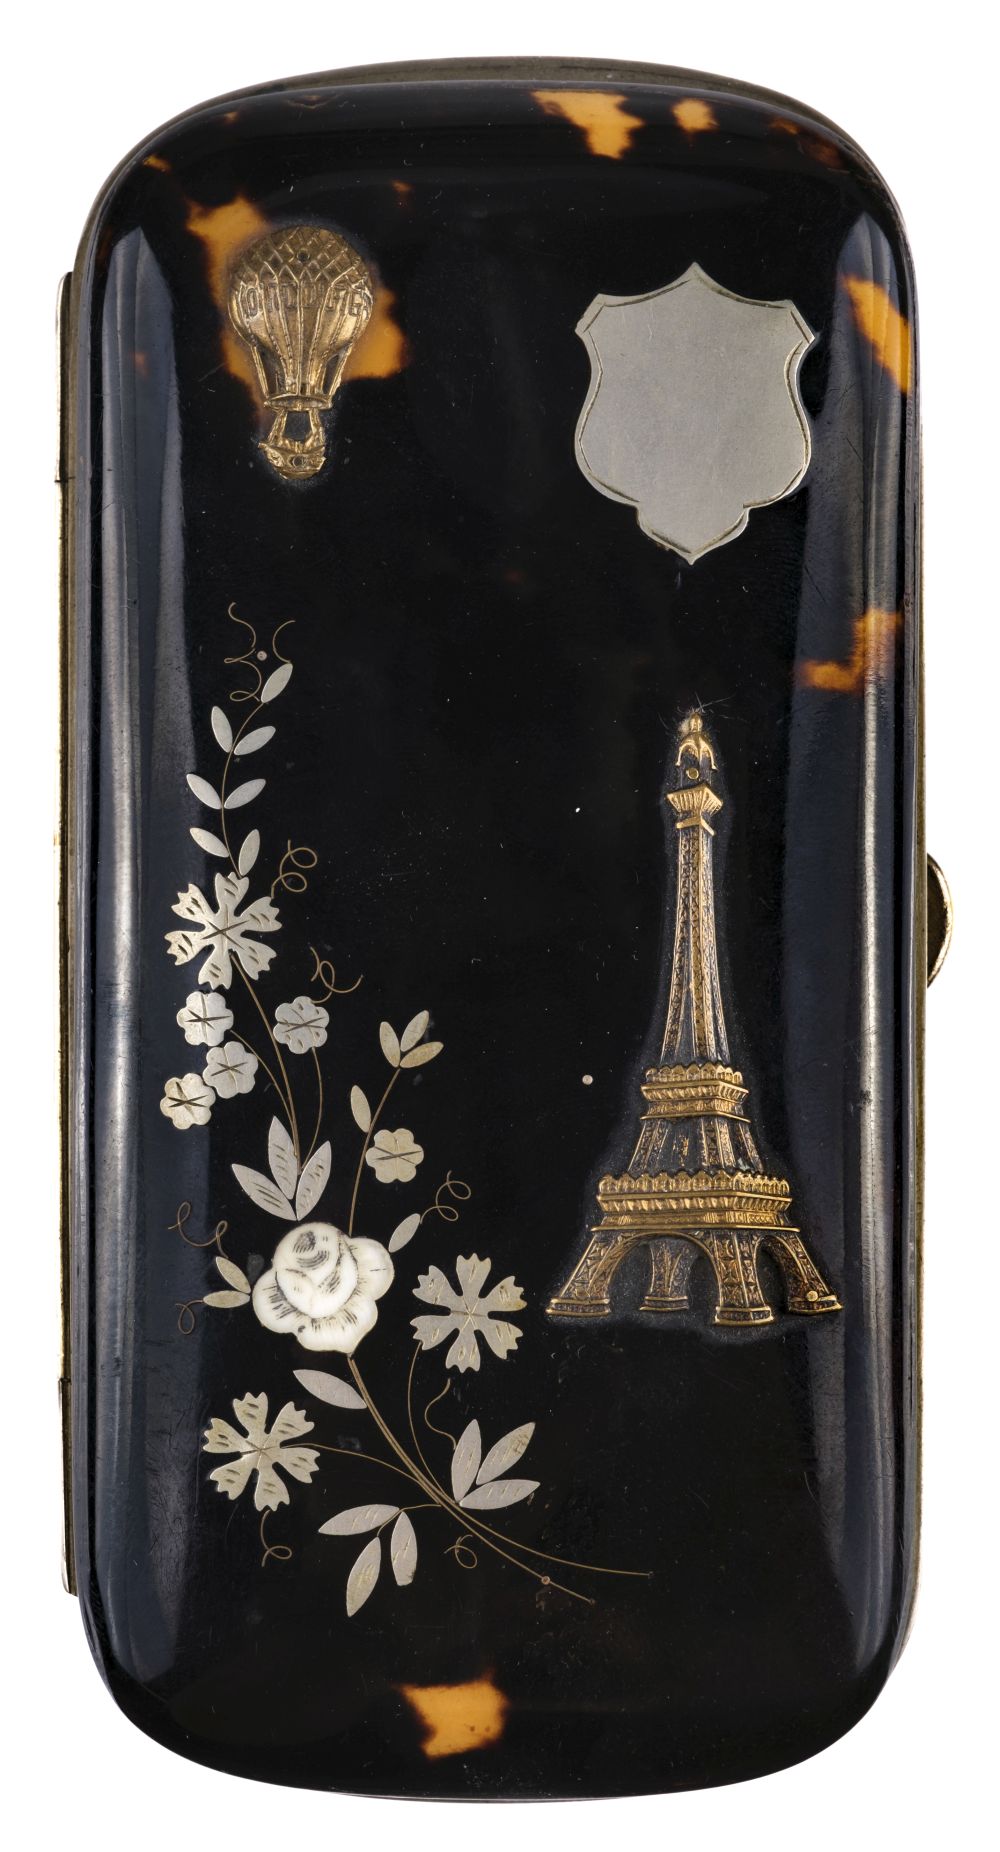 Lorgnettes Case. A French souvenir tortoiseshell lorgnettes case, circa 1890